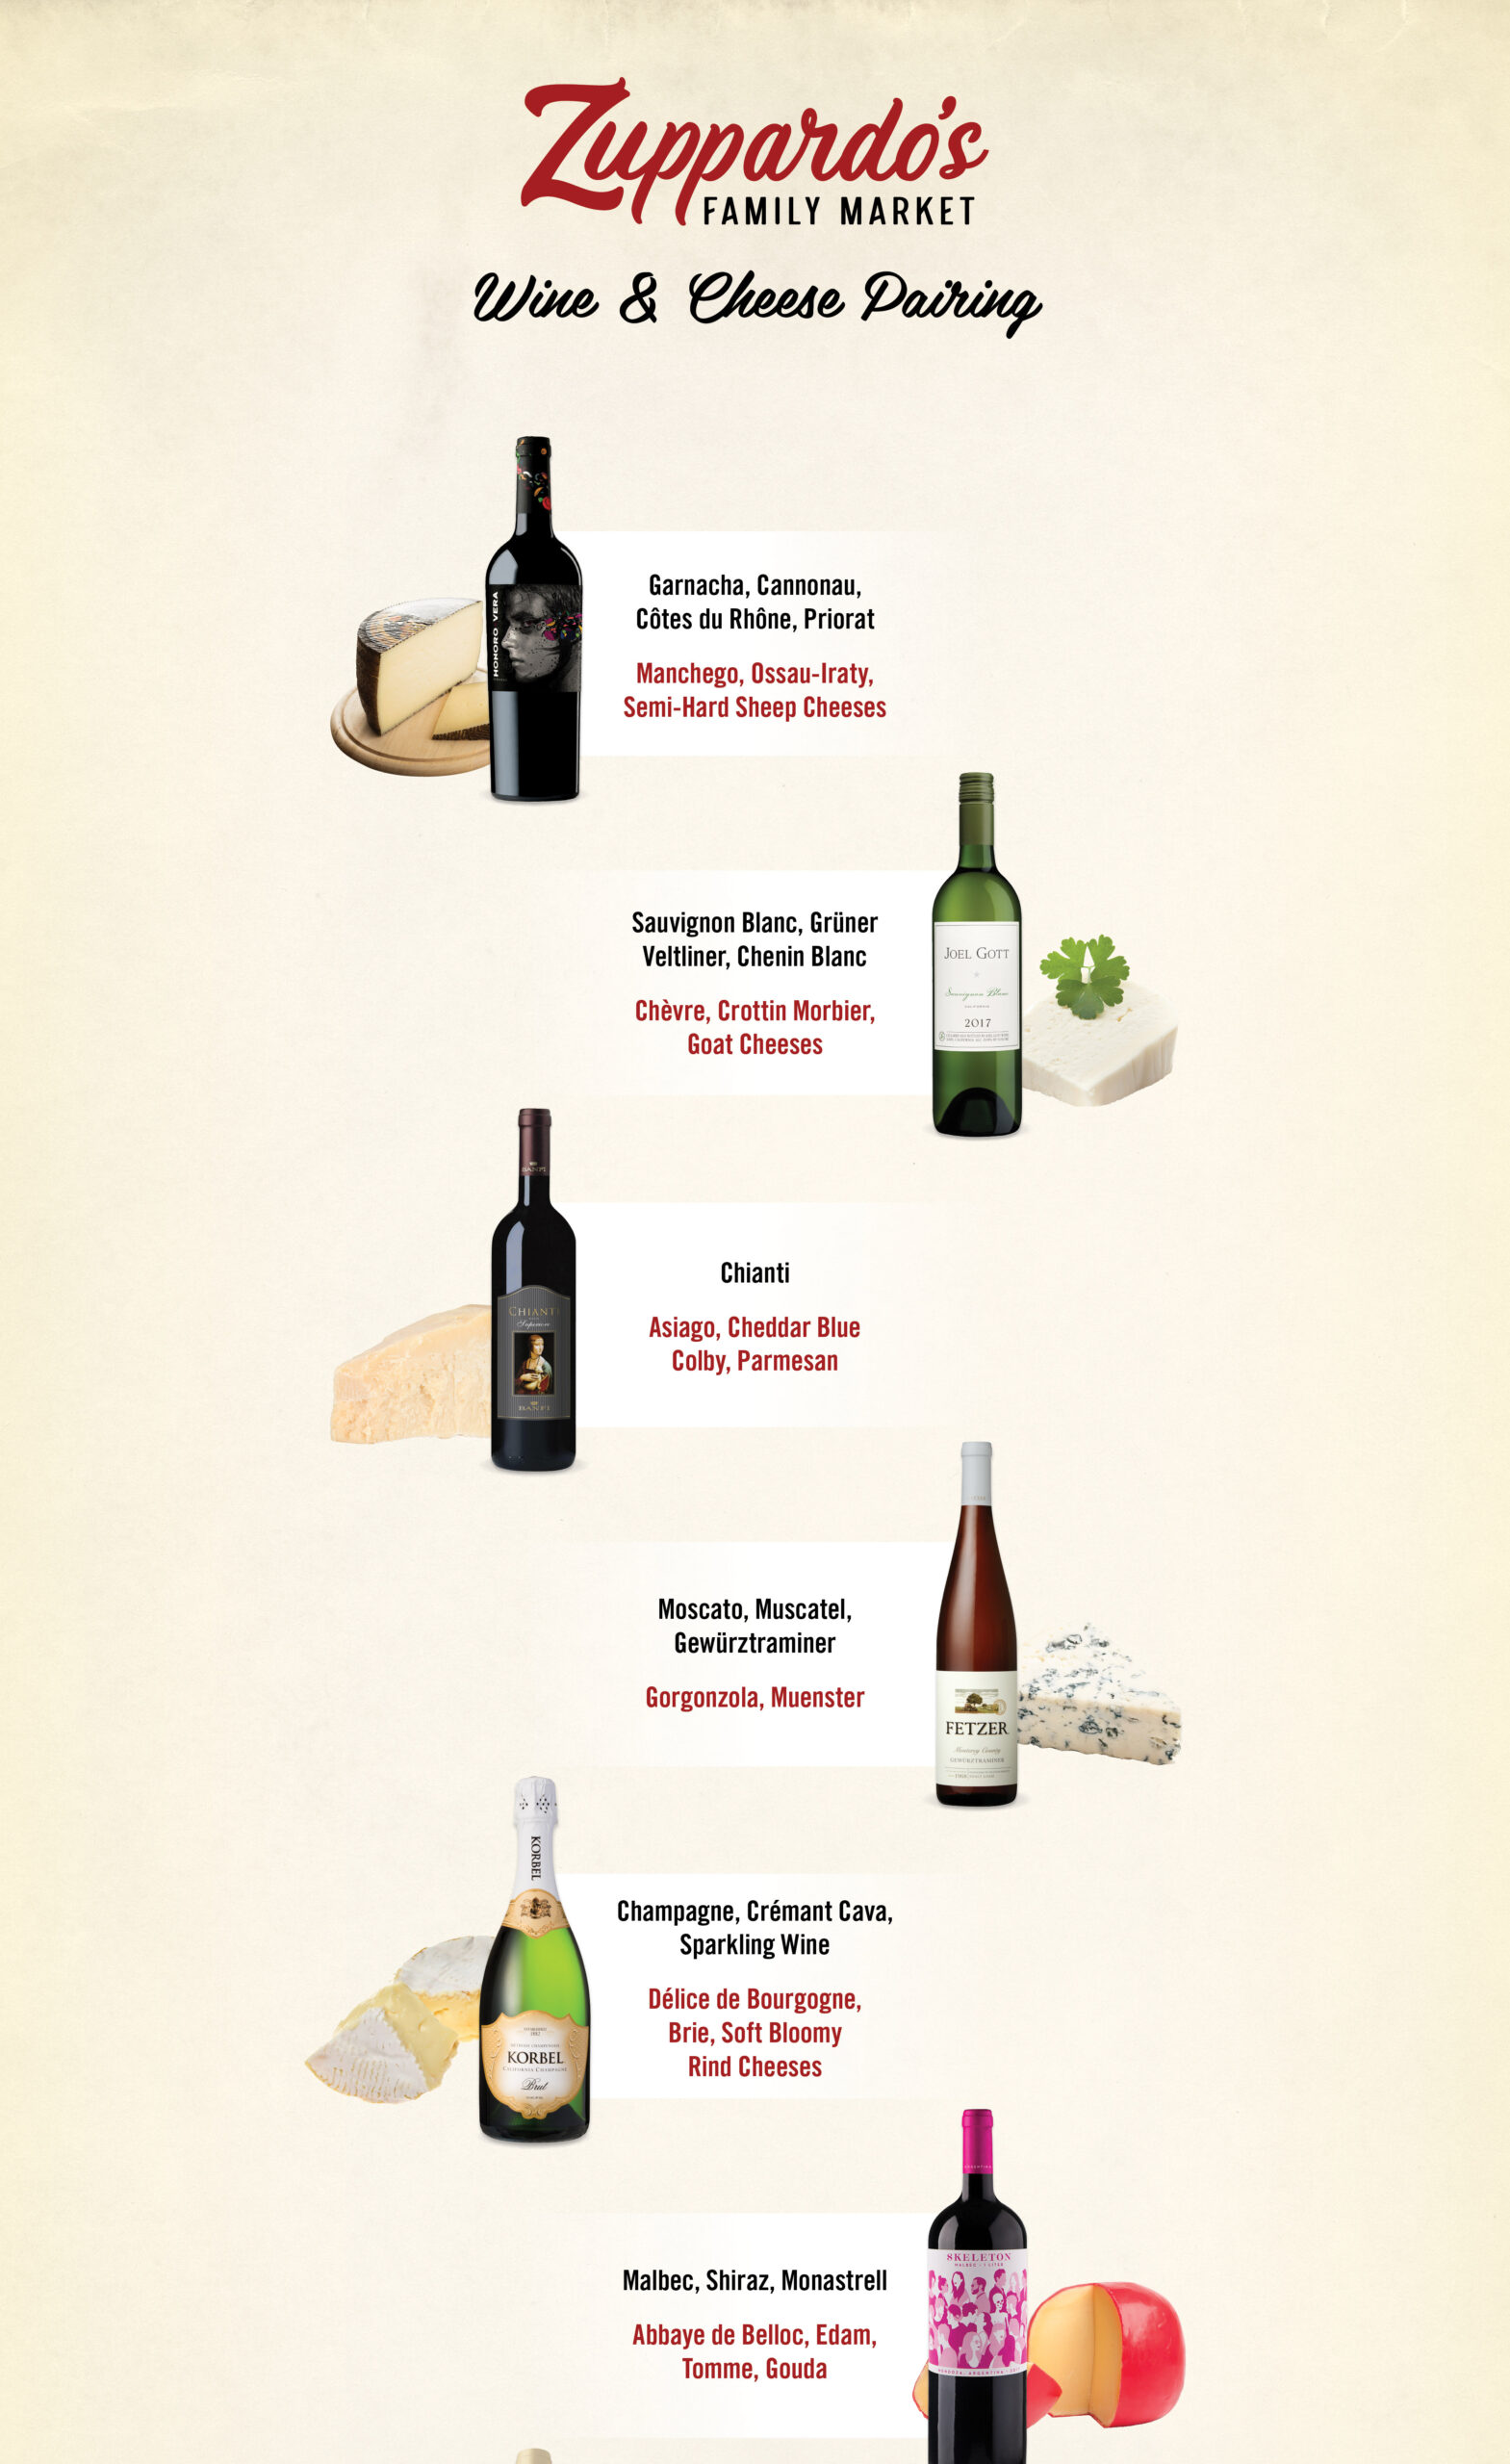 Zuppardo's Wine and Cheese Pairing Chart 1